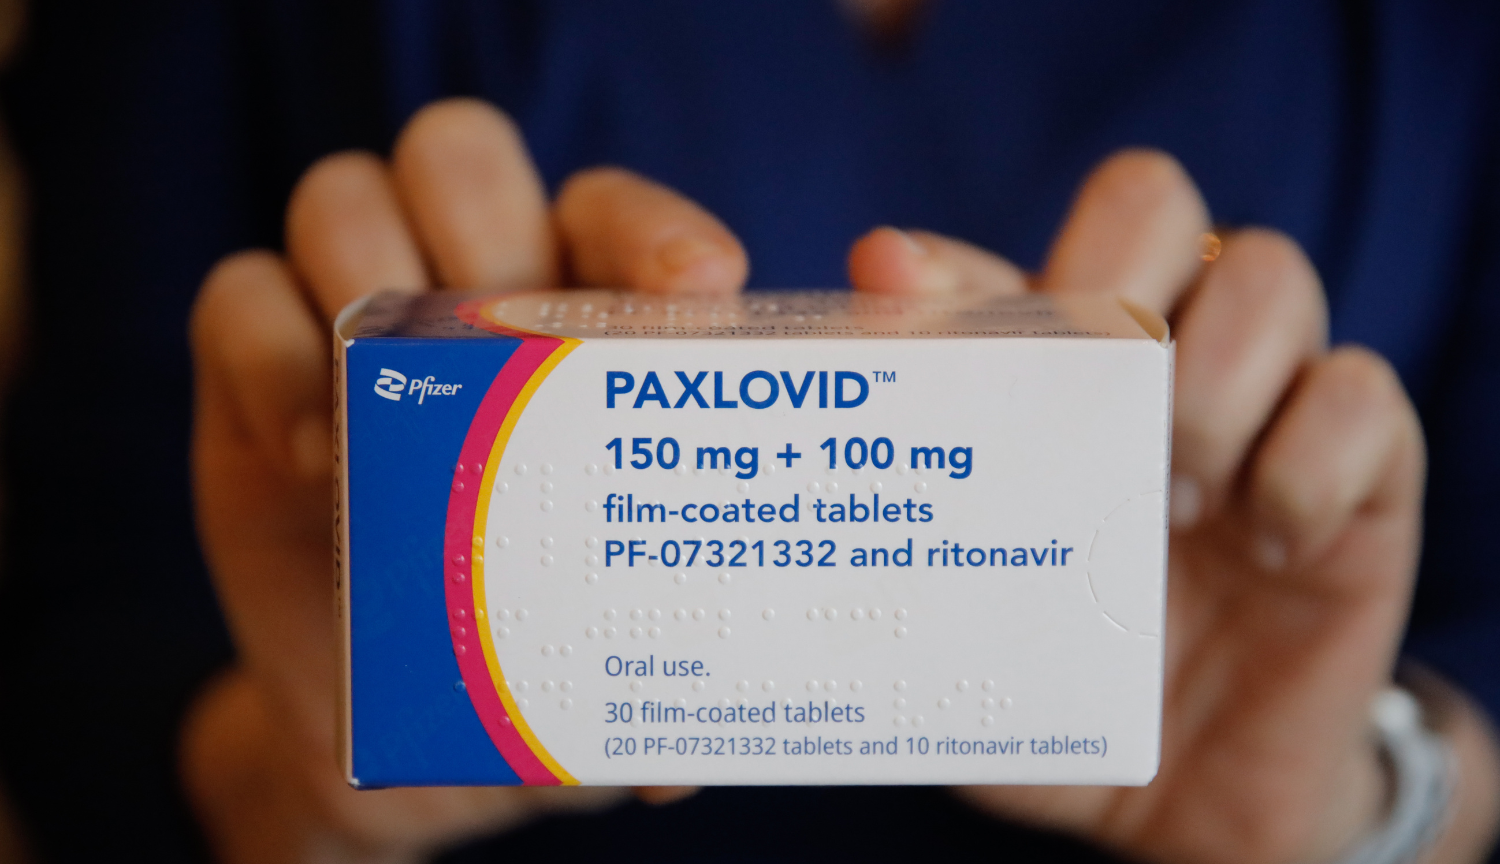 at home COVID treatment Paxlovid packaging, antiviral drug